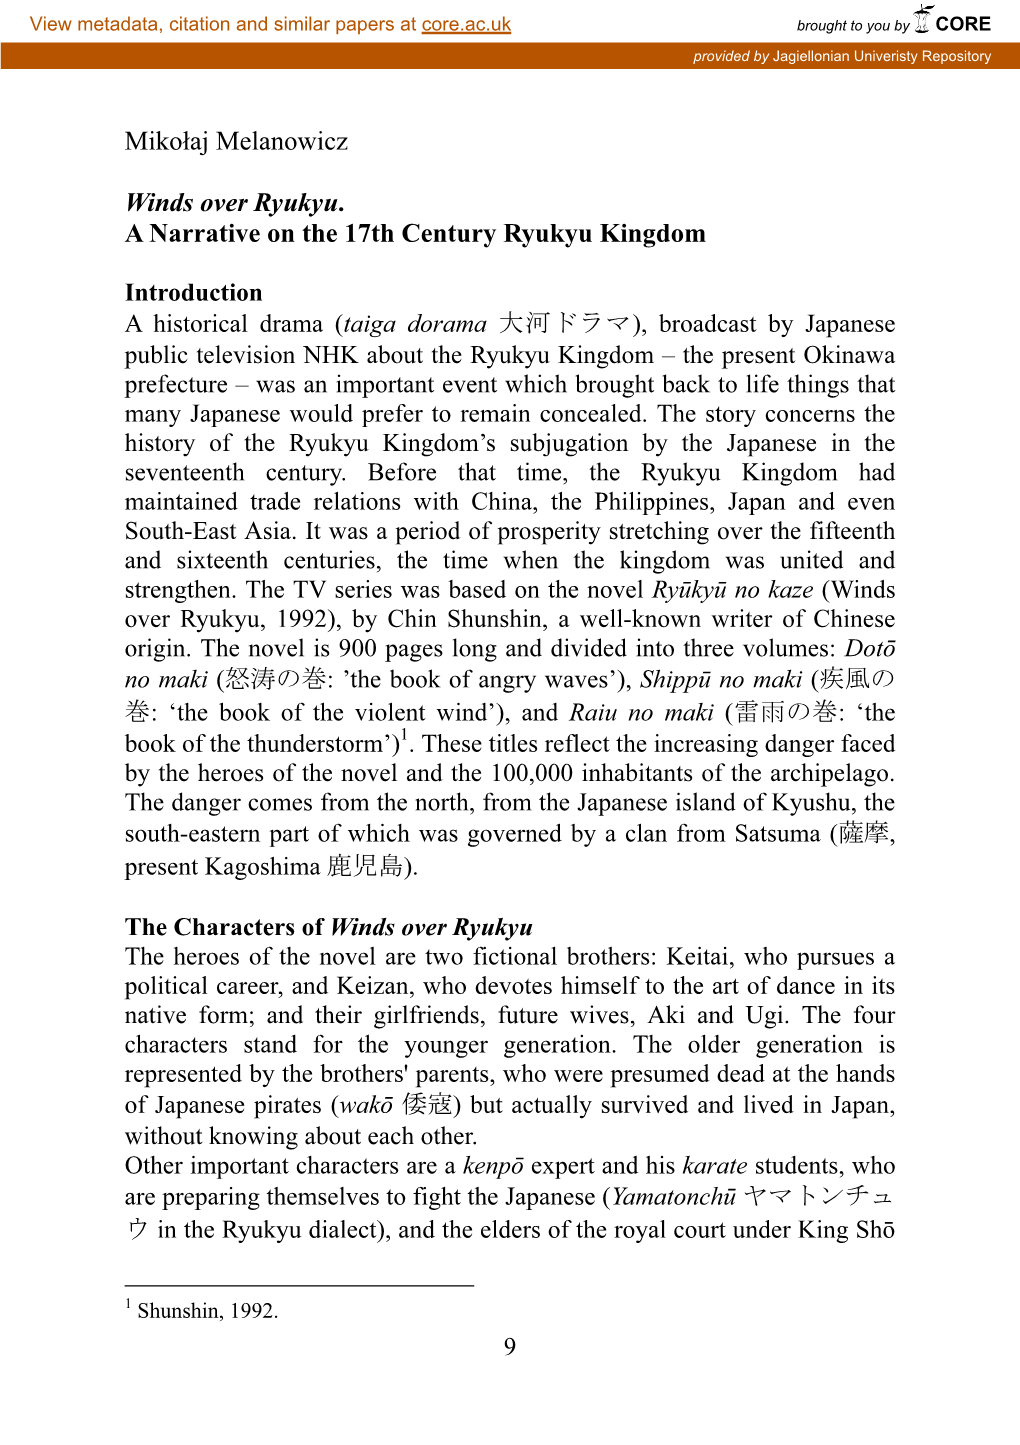 Winds Over Ryukyu. a Narrative on the 17Th Century Ryukyu Kingdom